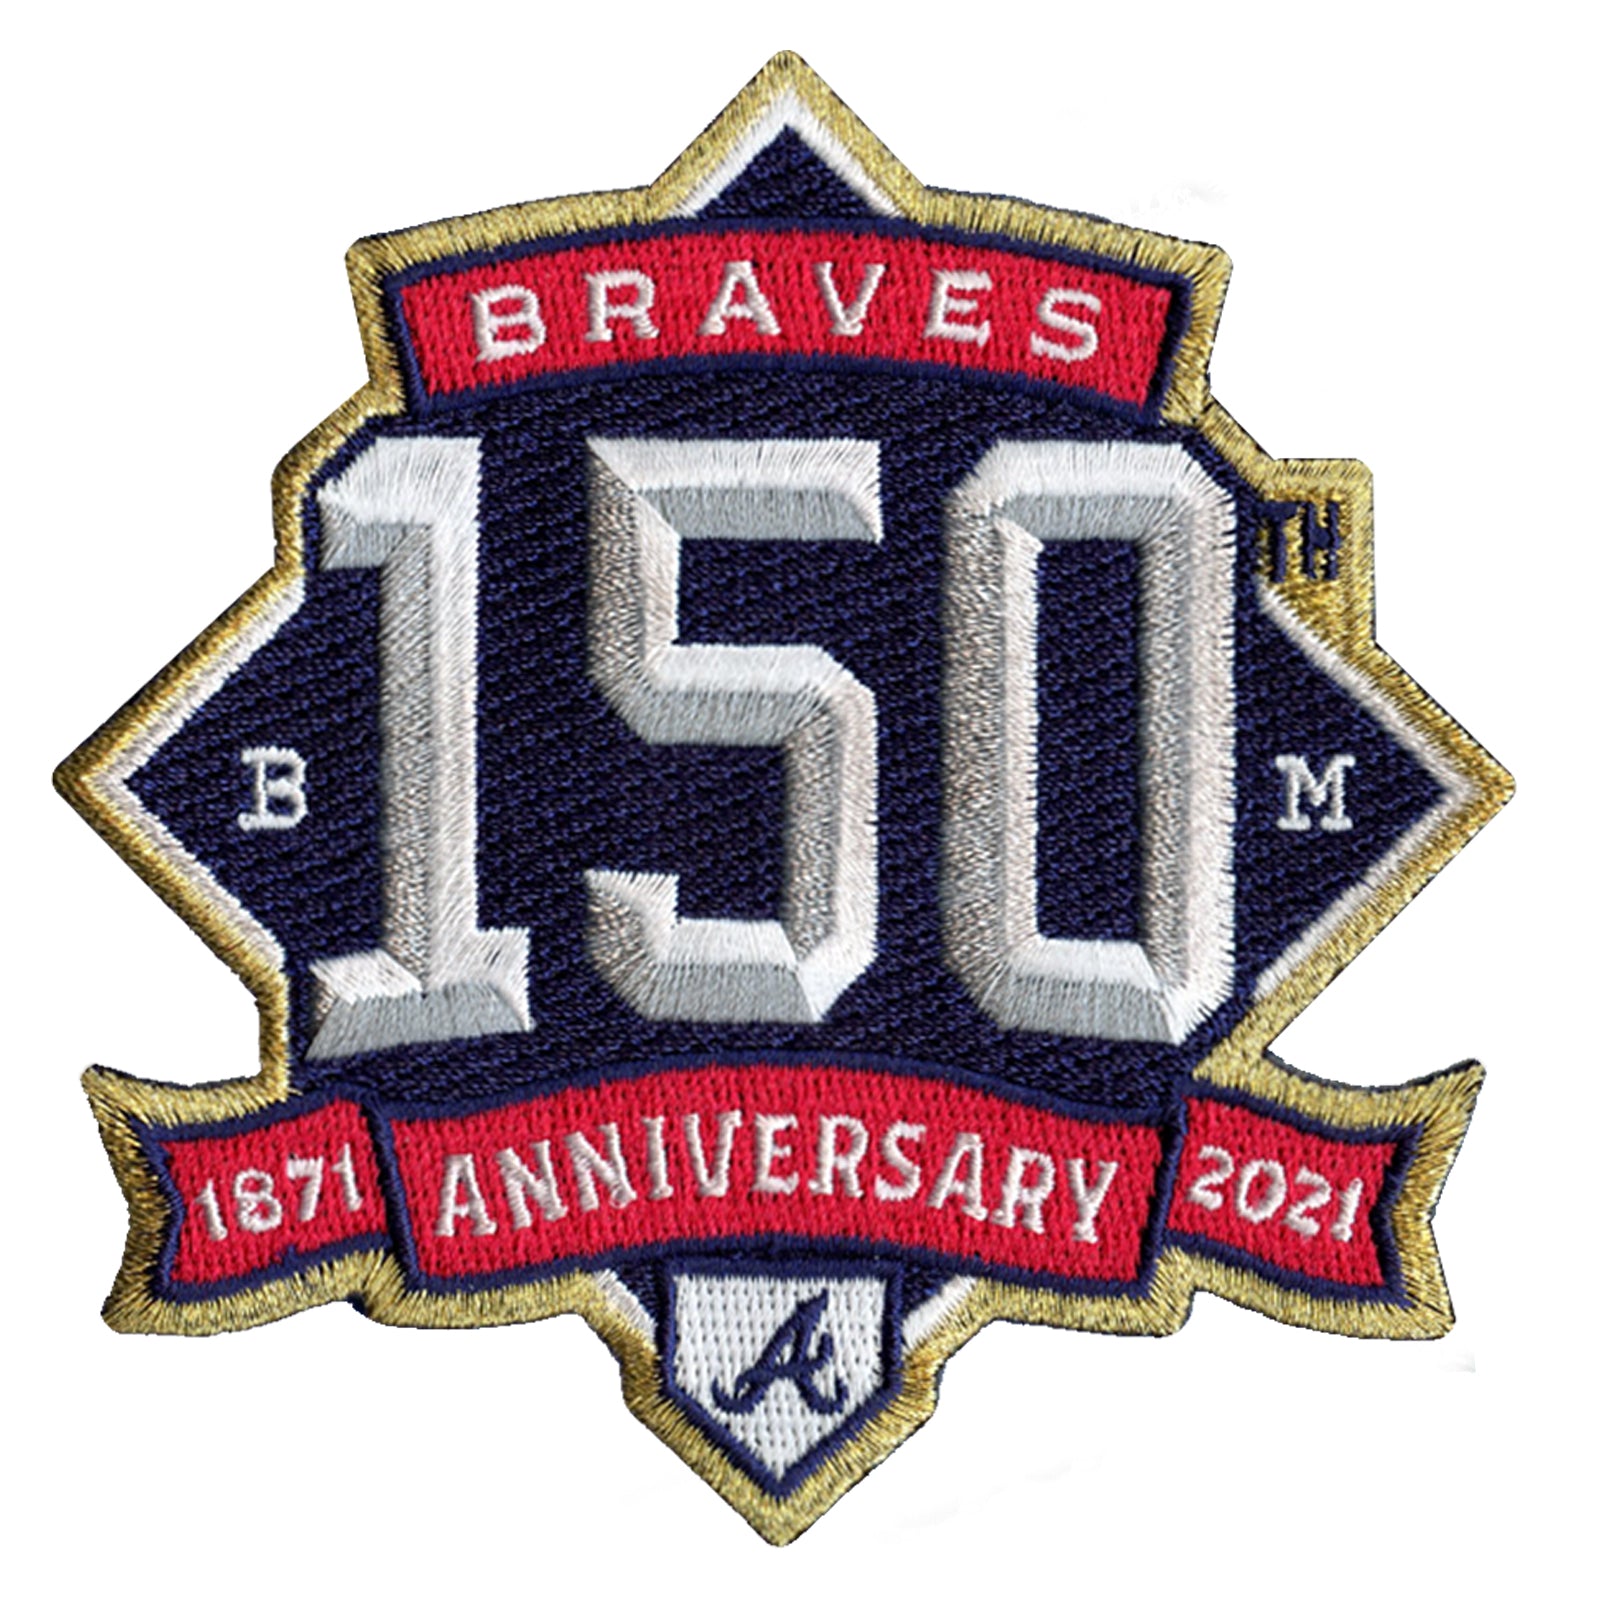 The atlanta braves baseball team 150th anniversary 1871 2021 thank